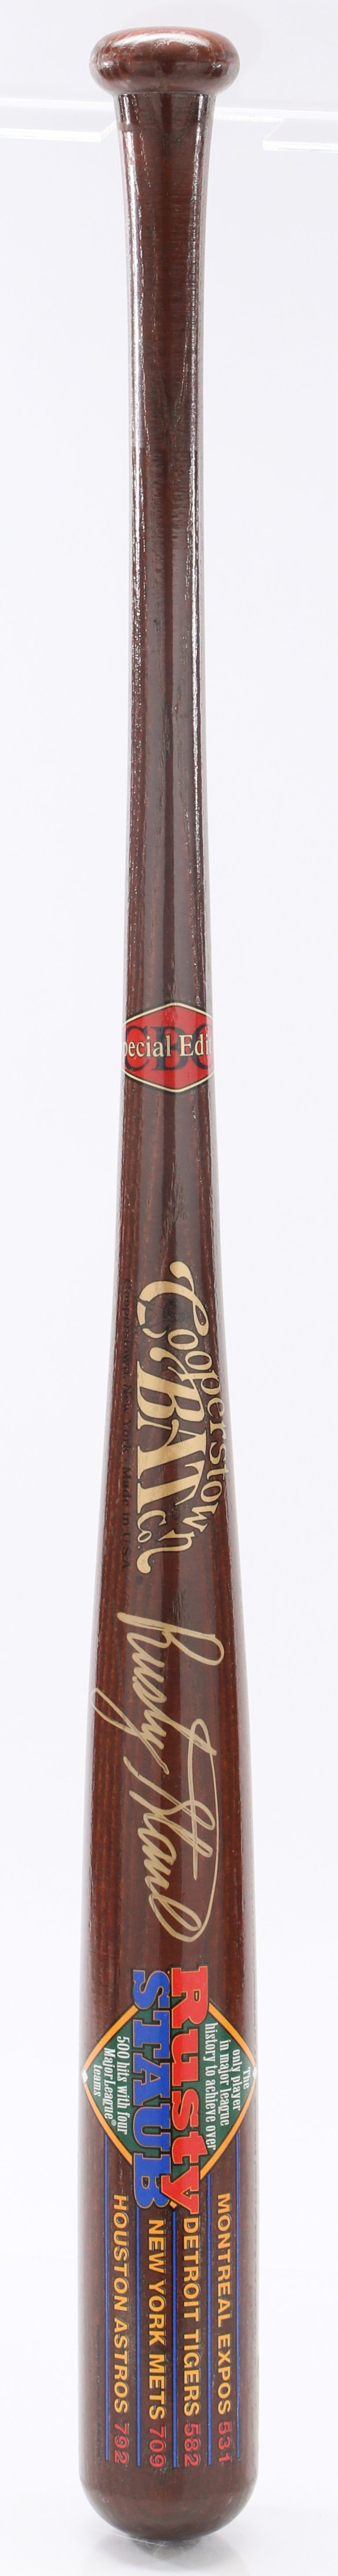 Rusty Staub Signed Commemorative Baseball Bat